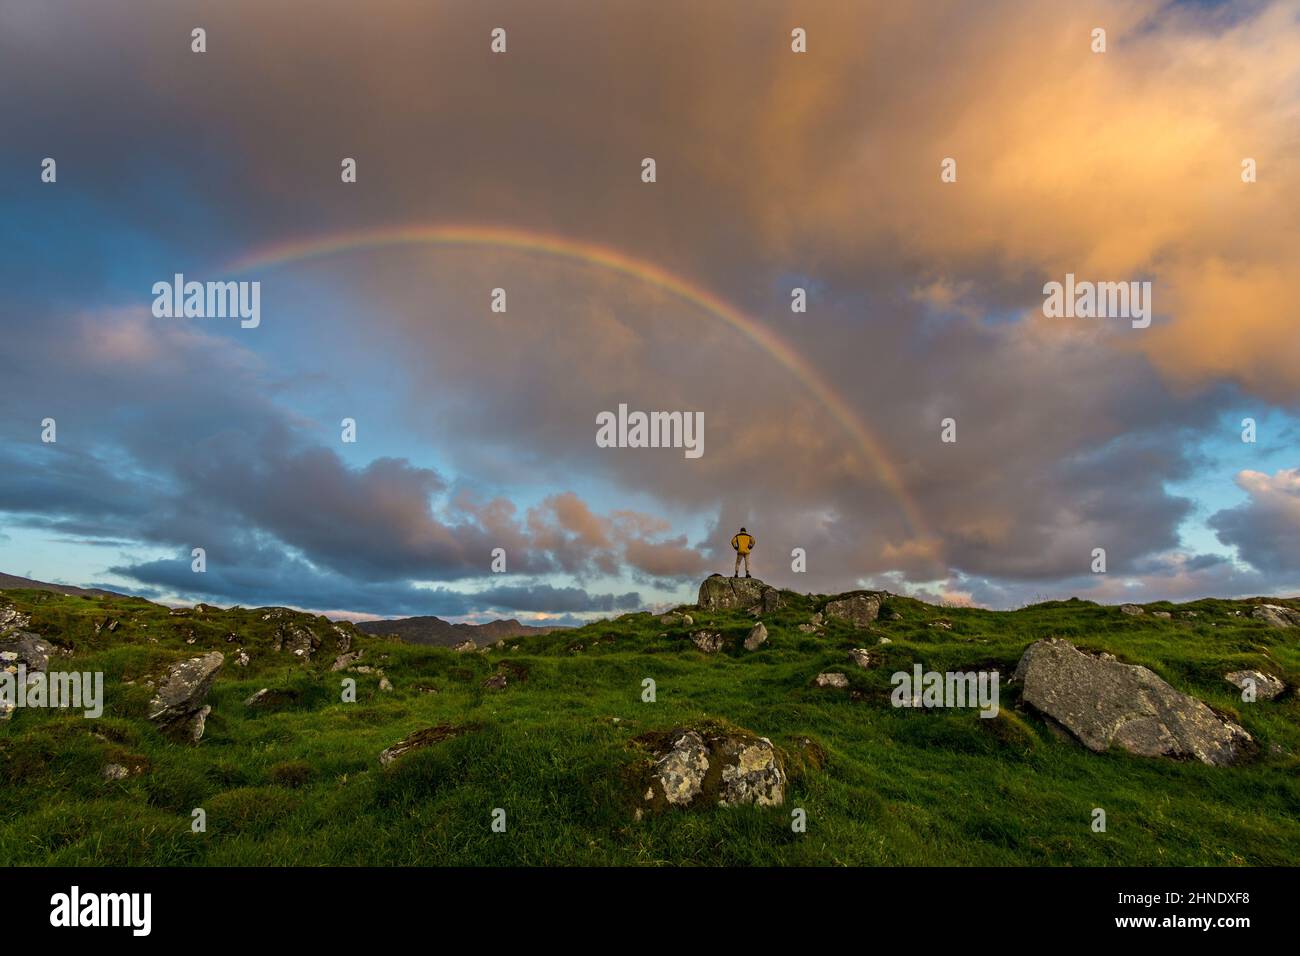 Un caminante mira un arco iris en terreno accidentado cerca de Ardara, Condado de Donegal, Irlanda. Foto de stock